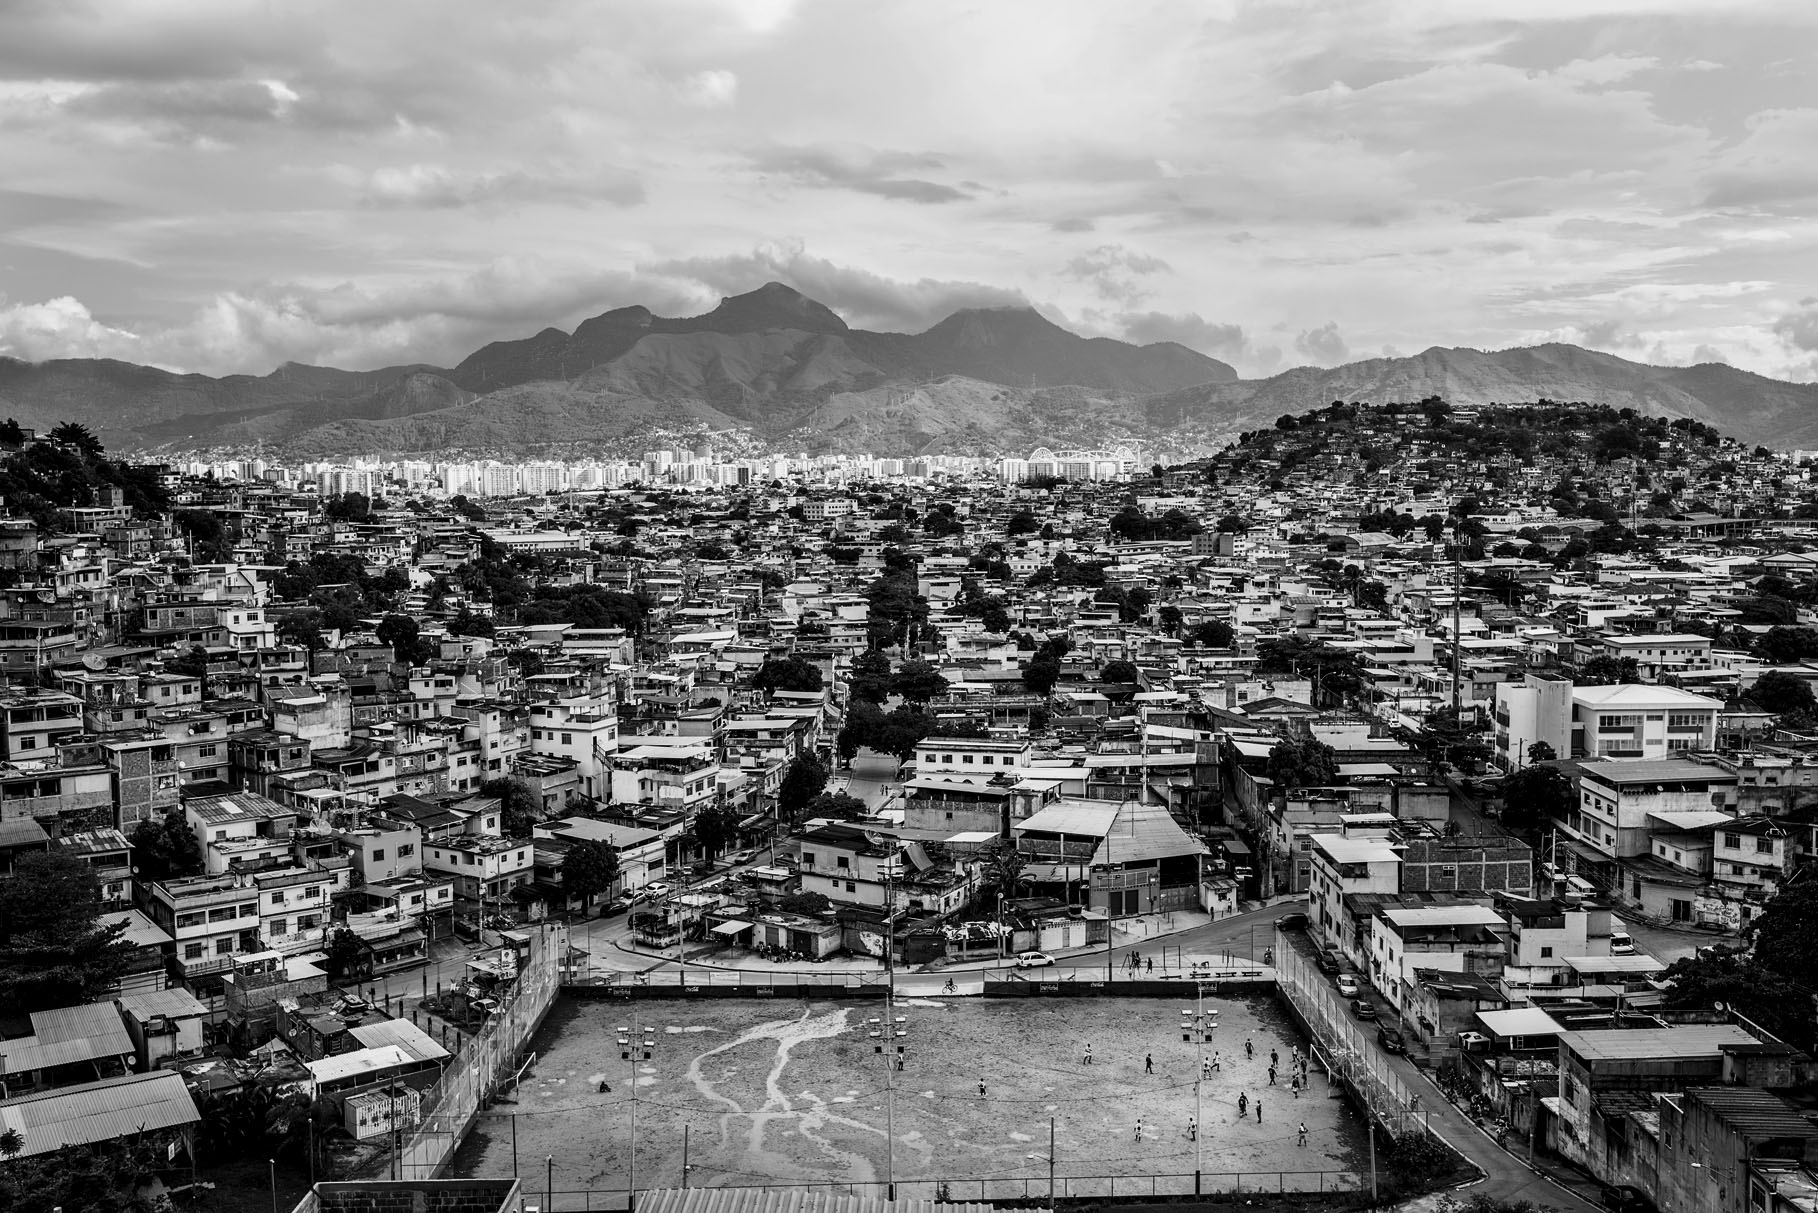 The New York Times Magazine: ‘The Media Doesn’t Care What Happens Here’The Complexo do Alemão favelas in Rio de Janeiro.